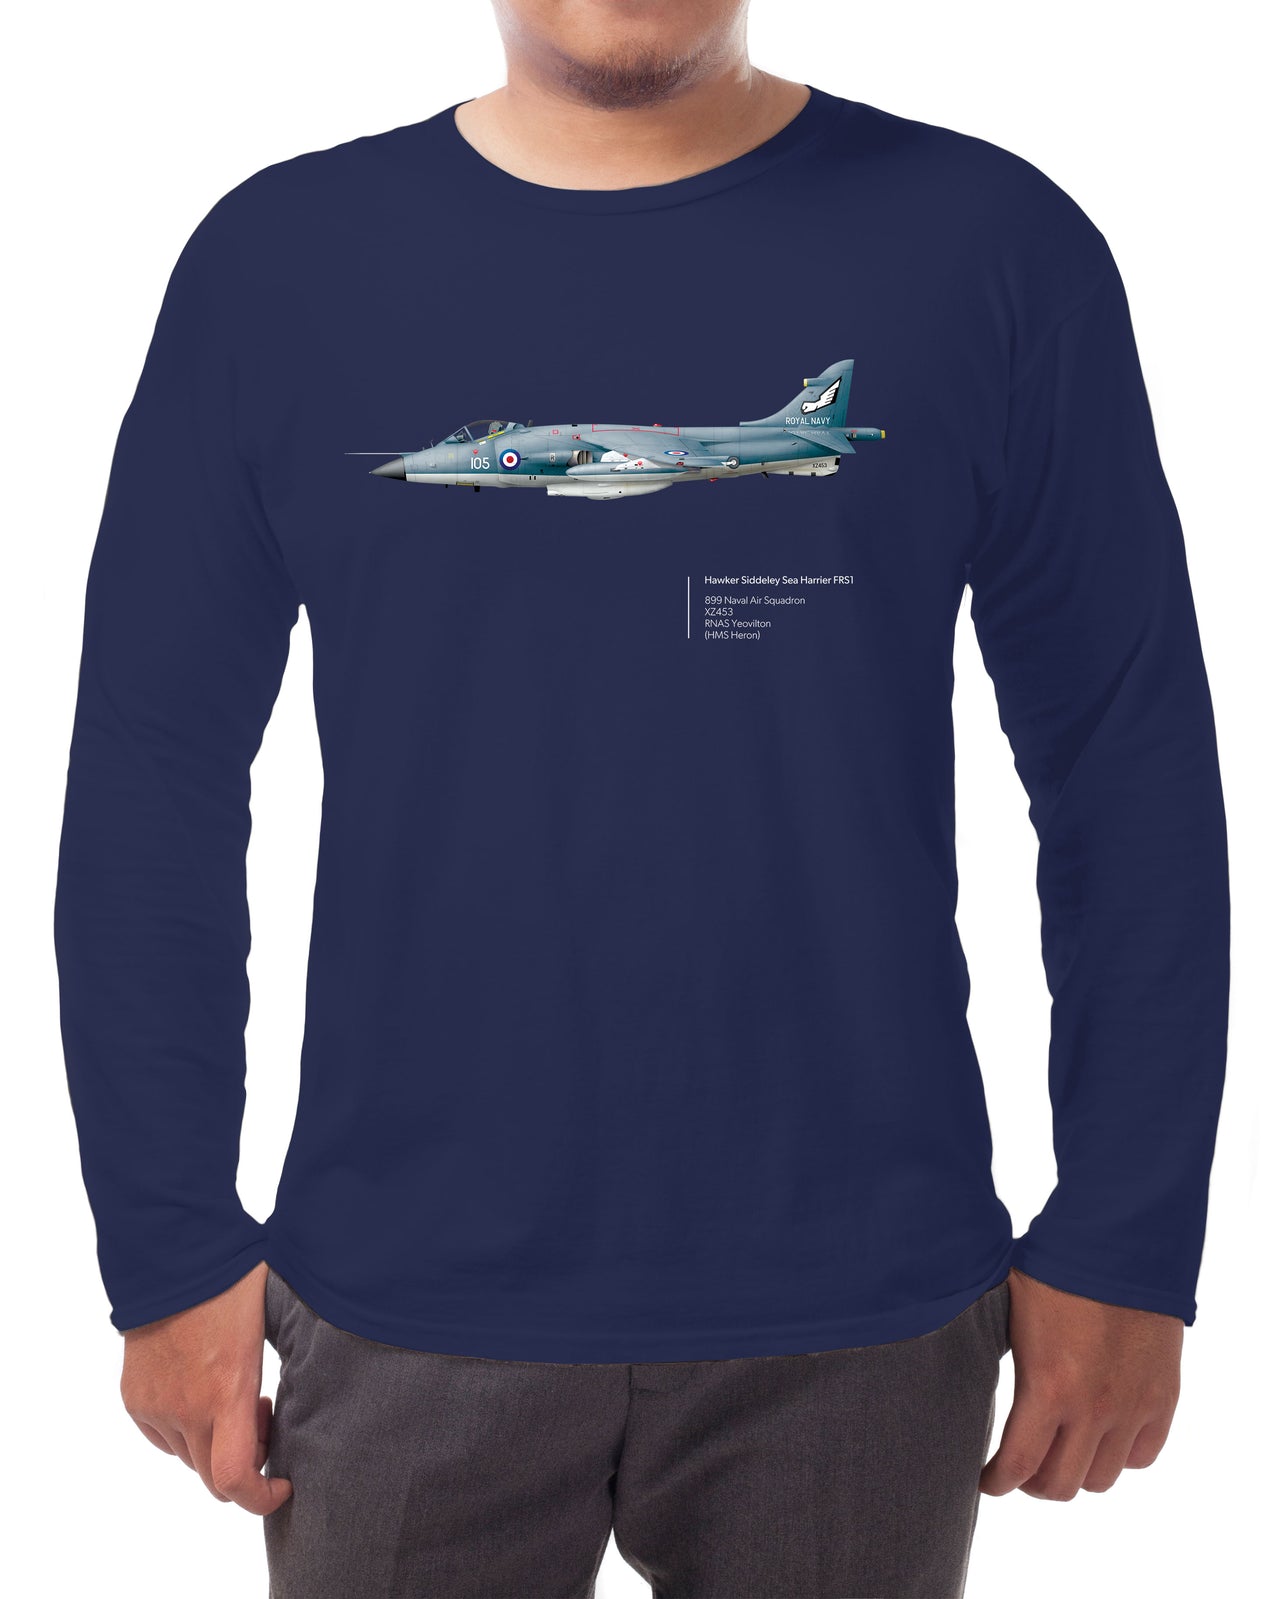 Sea Harrier 899 NAS - Long-sleeve T-shirt